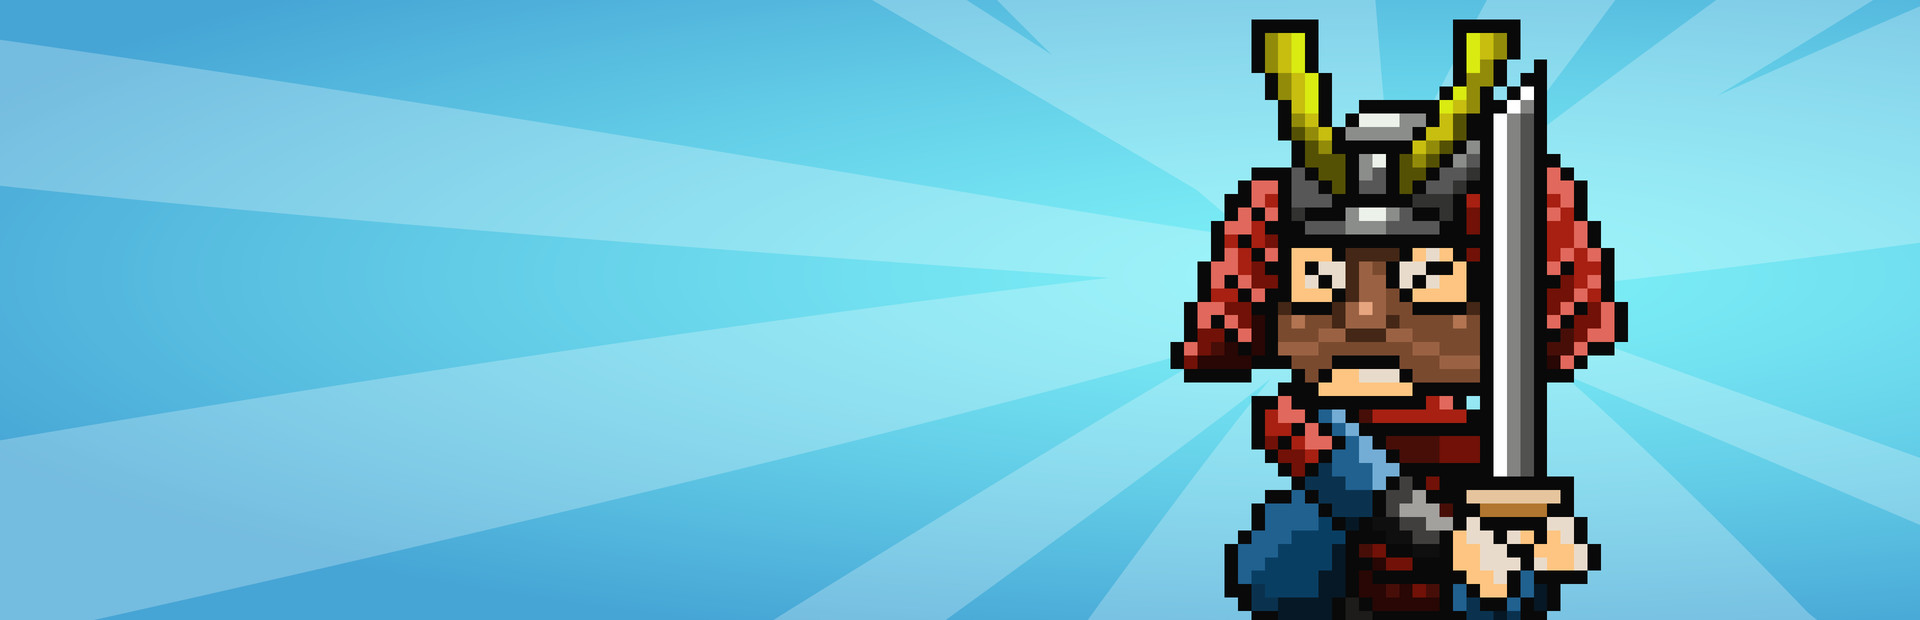 Tap Ninja - Idle game cover image